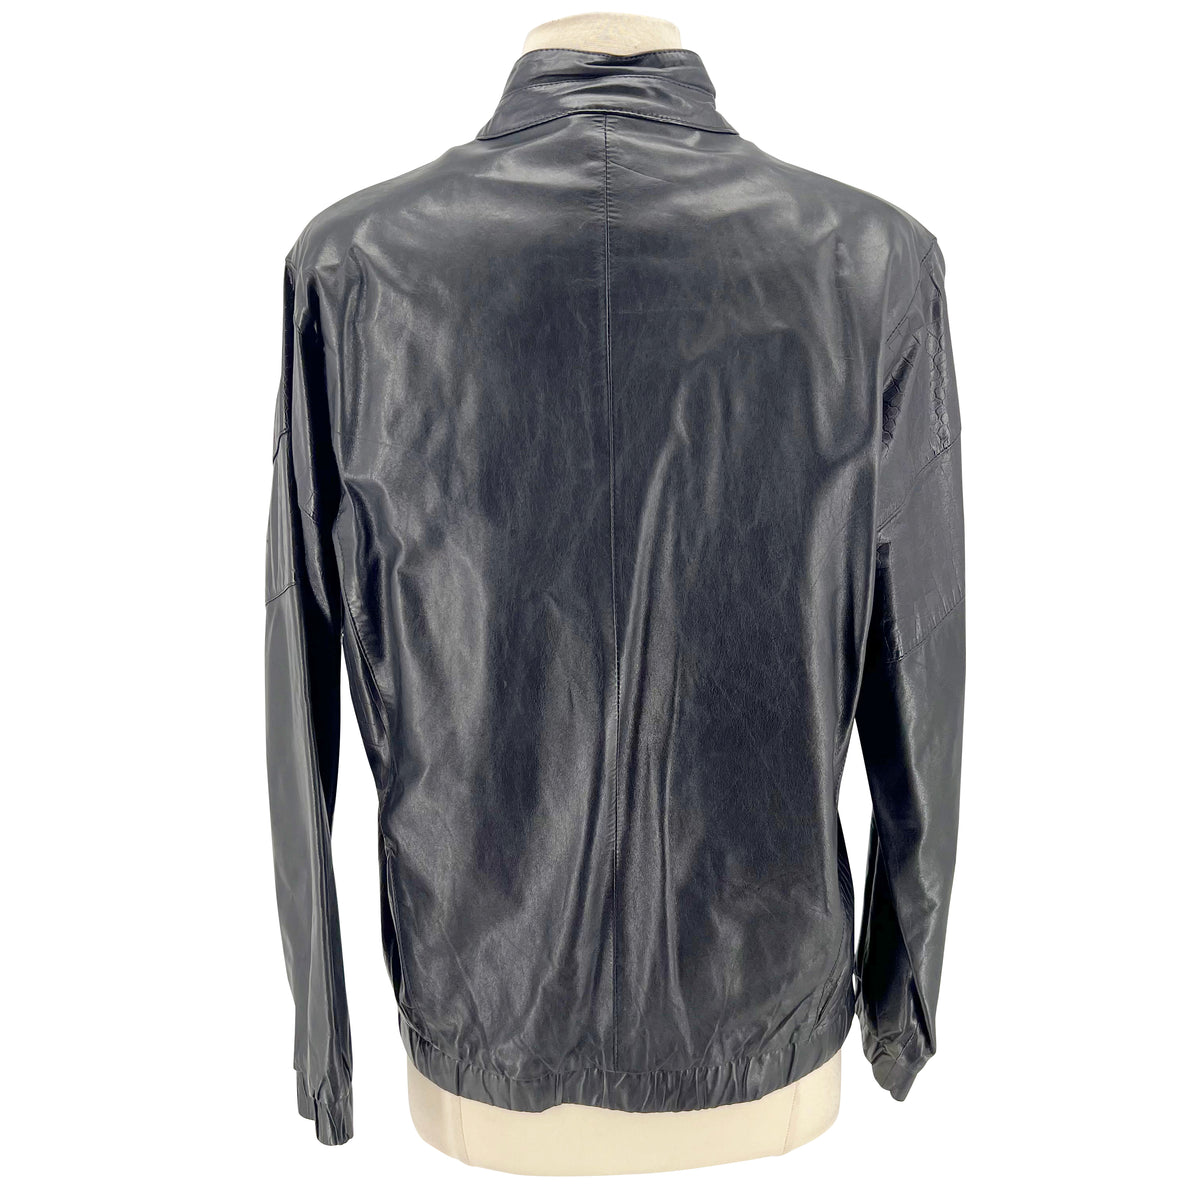 Wilson Leather Size 10 Black Leather Jacket